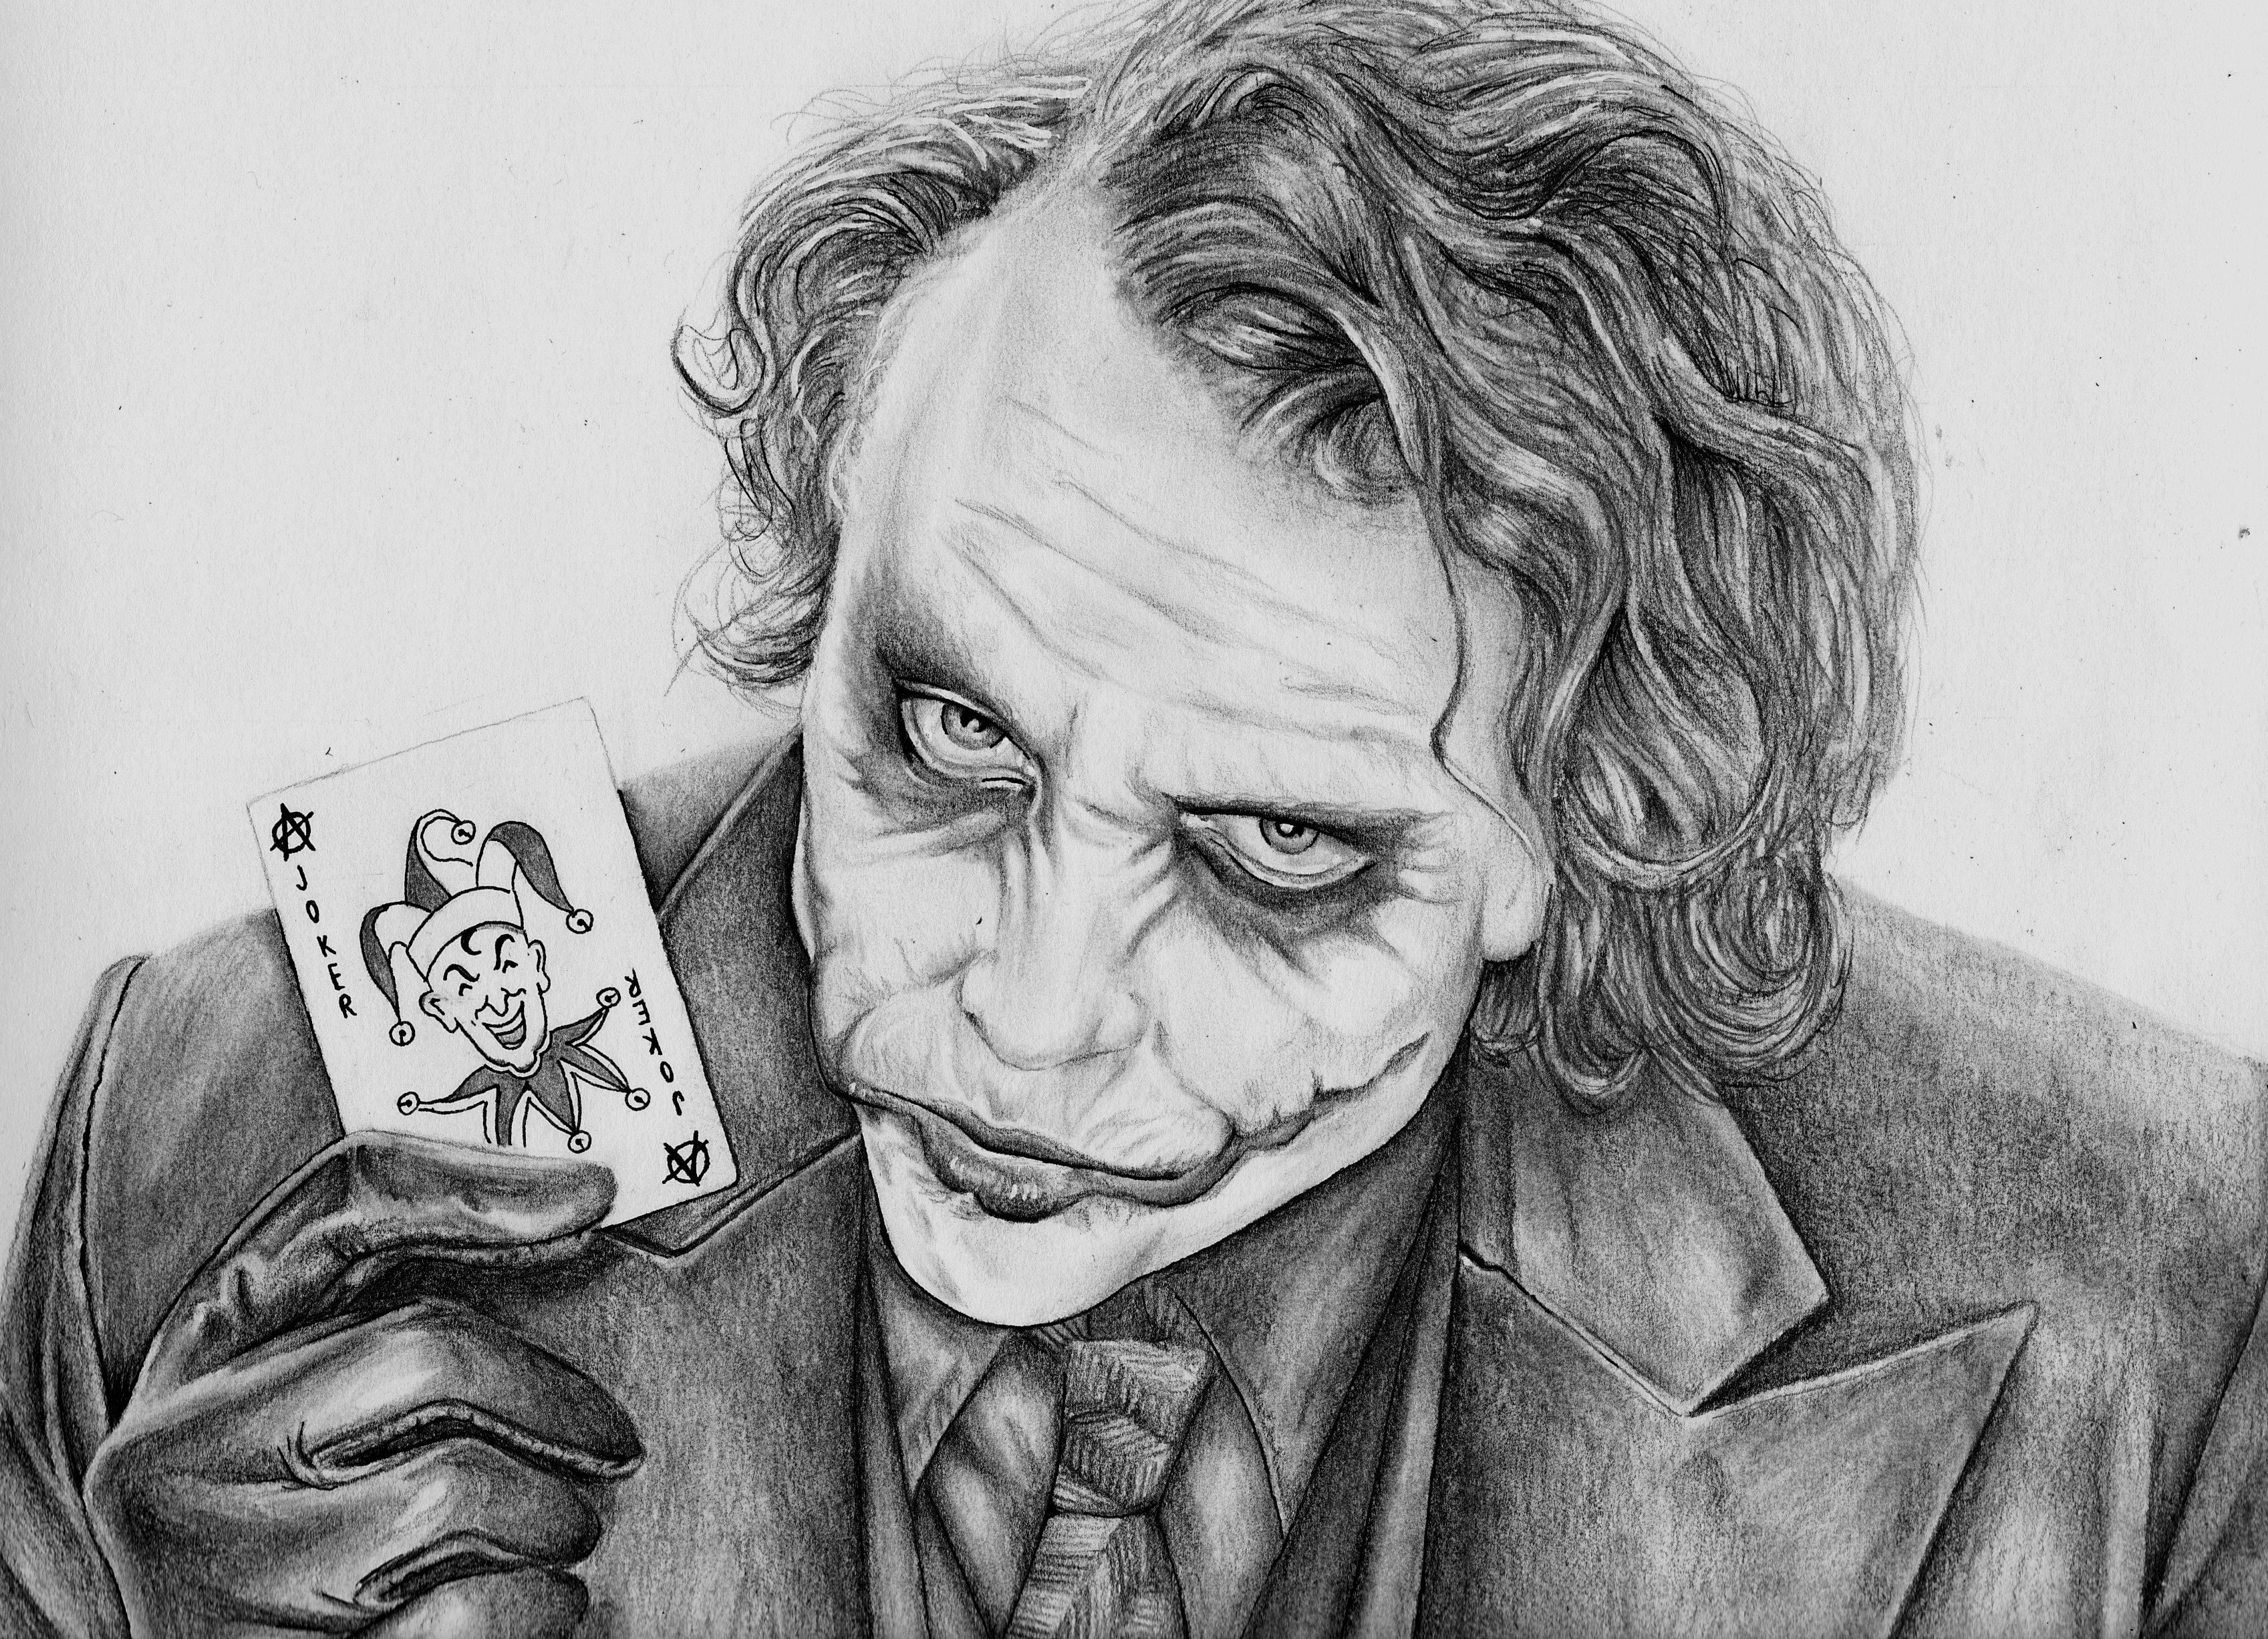 Heath Ledger Joker Drawing Easy / My Joker sketch of Heath Ledger from